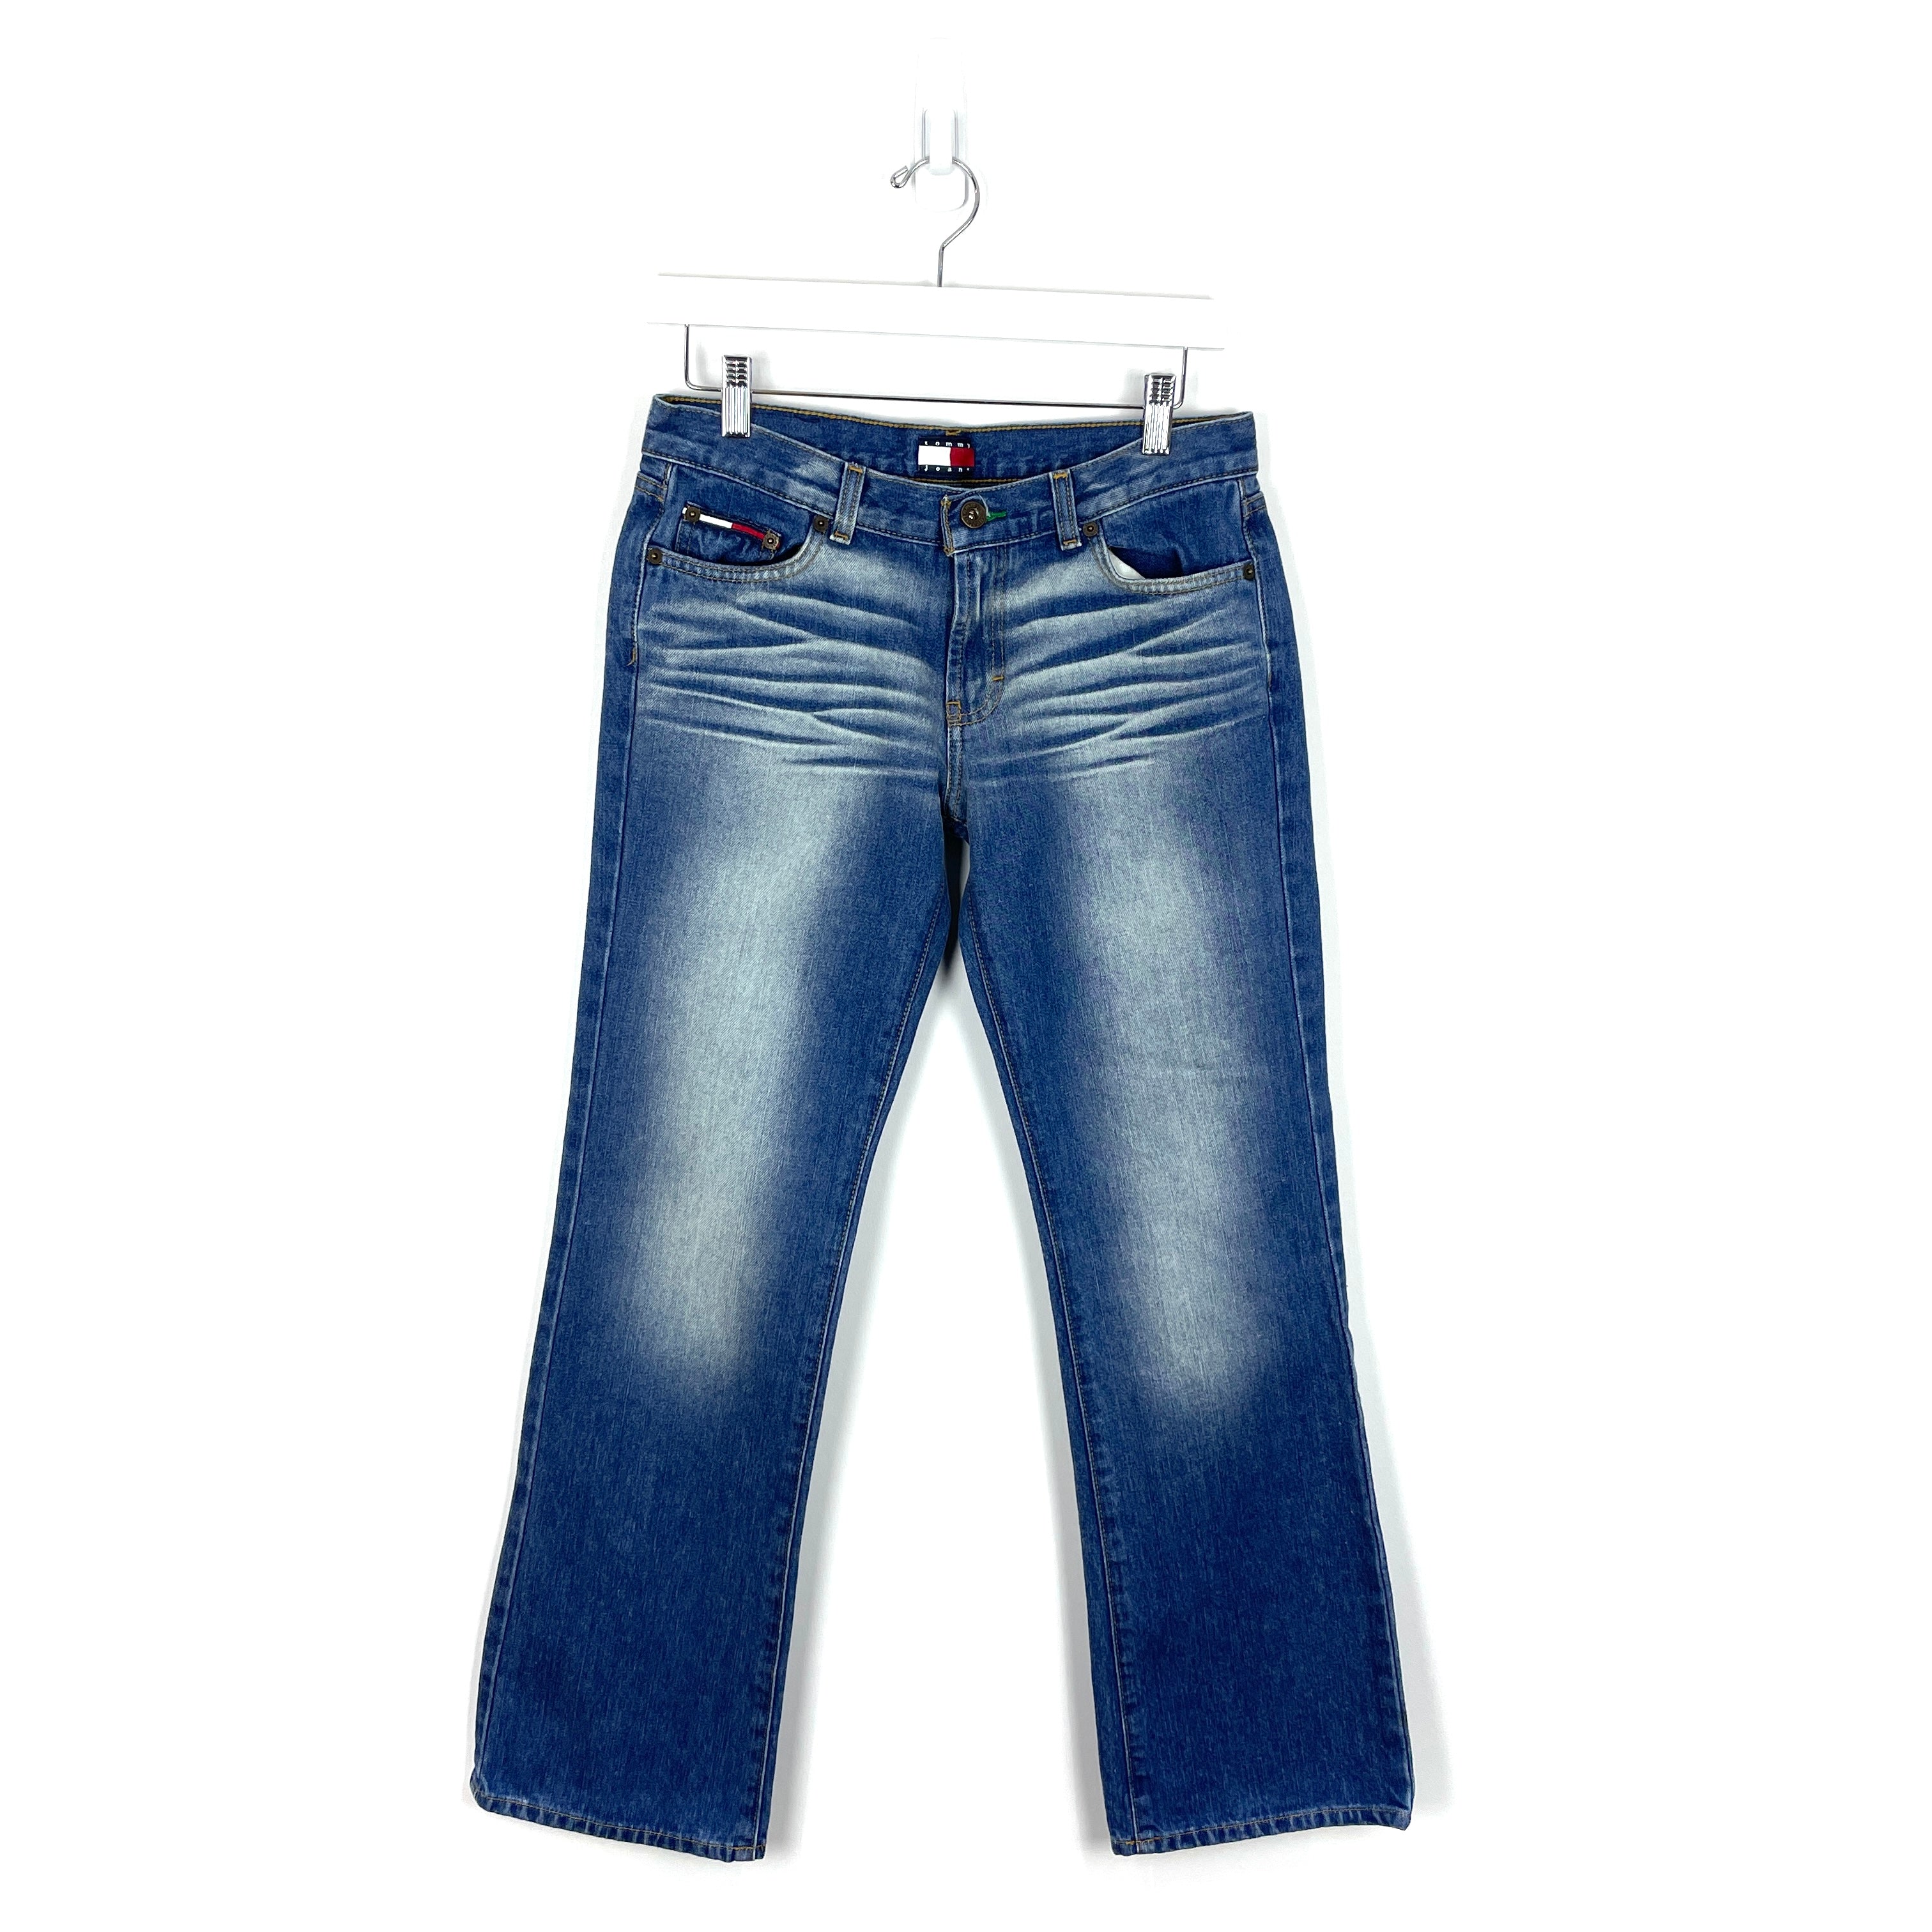 Vintage Tommy Hilfiger Jeans - Women's 30/31